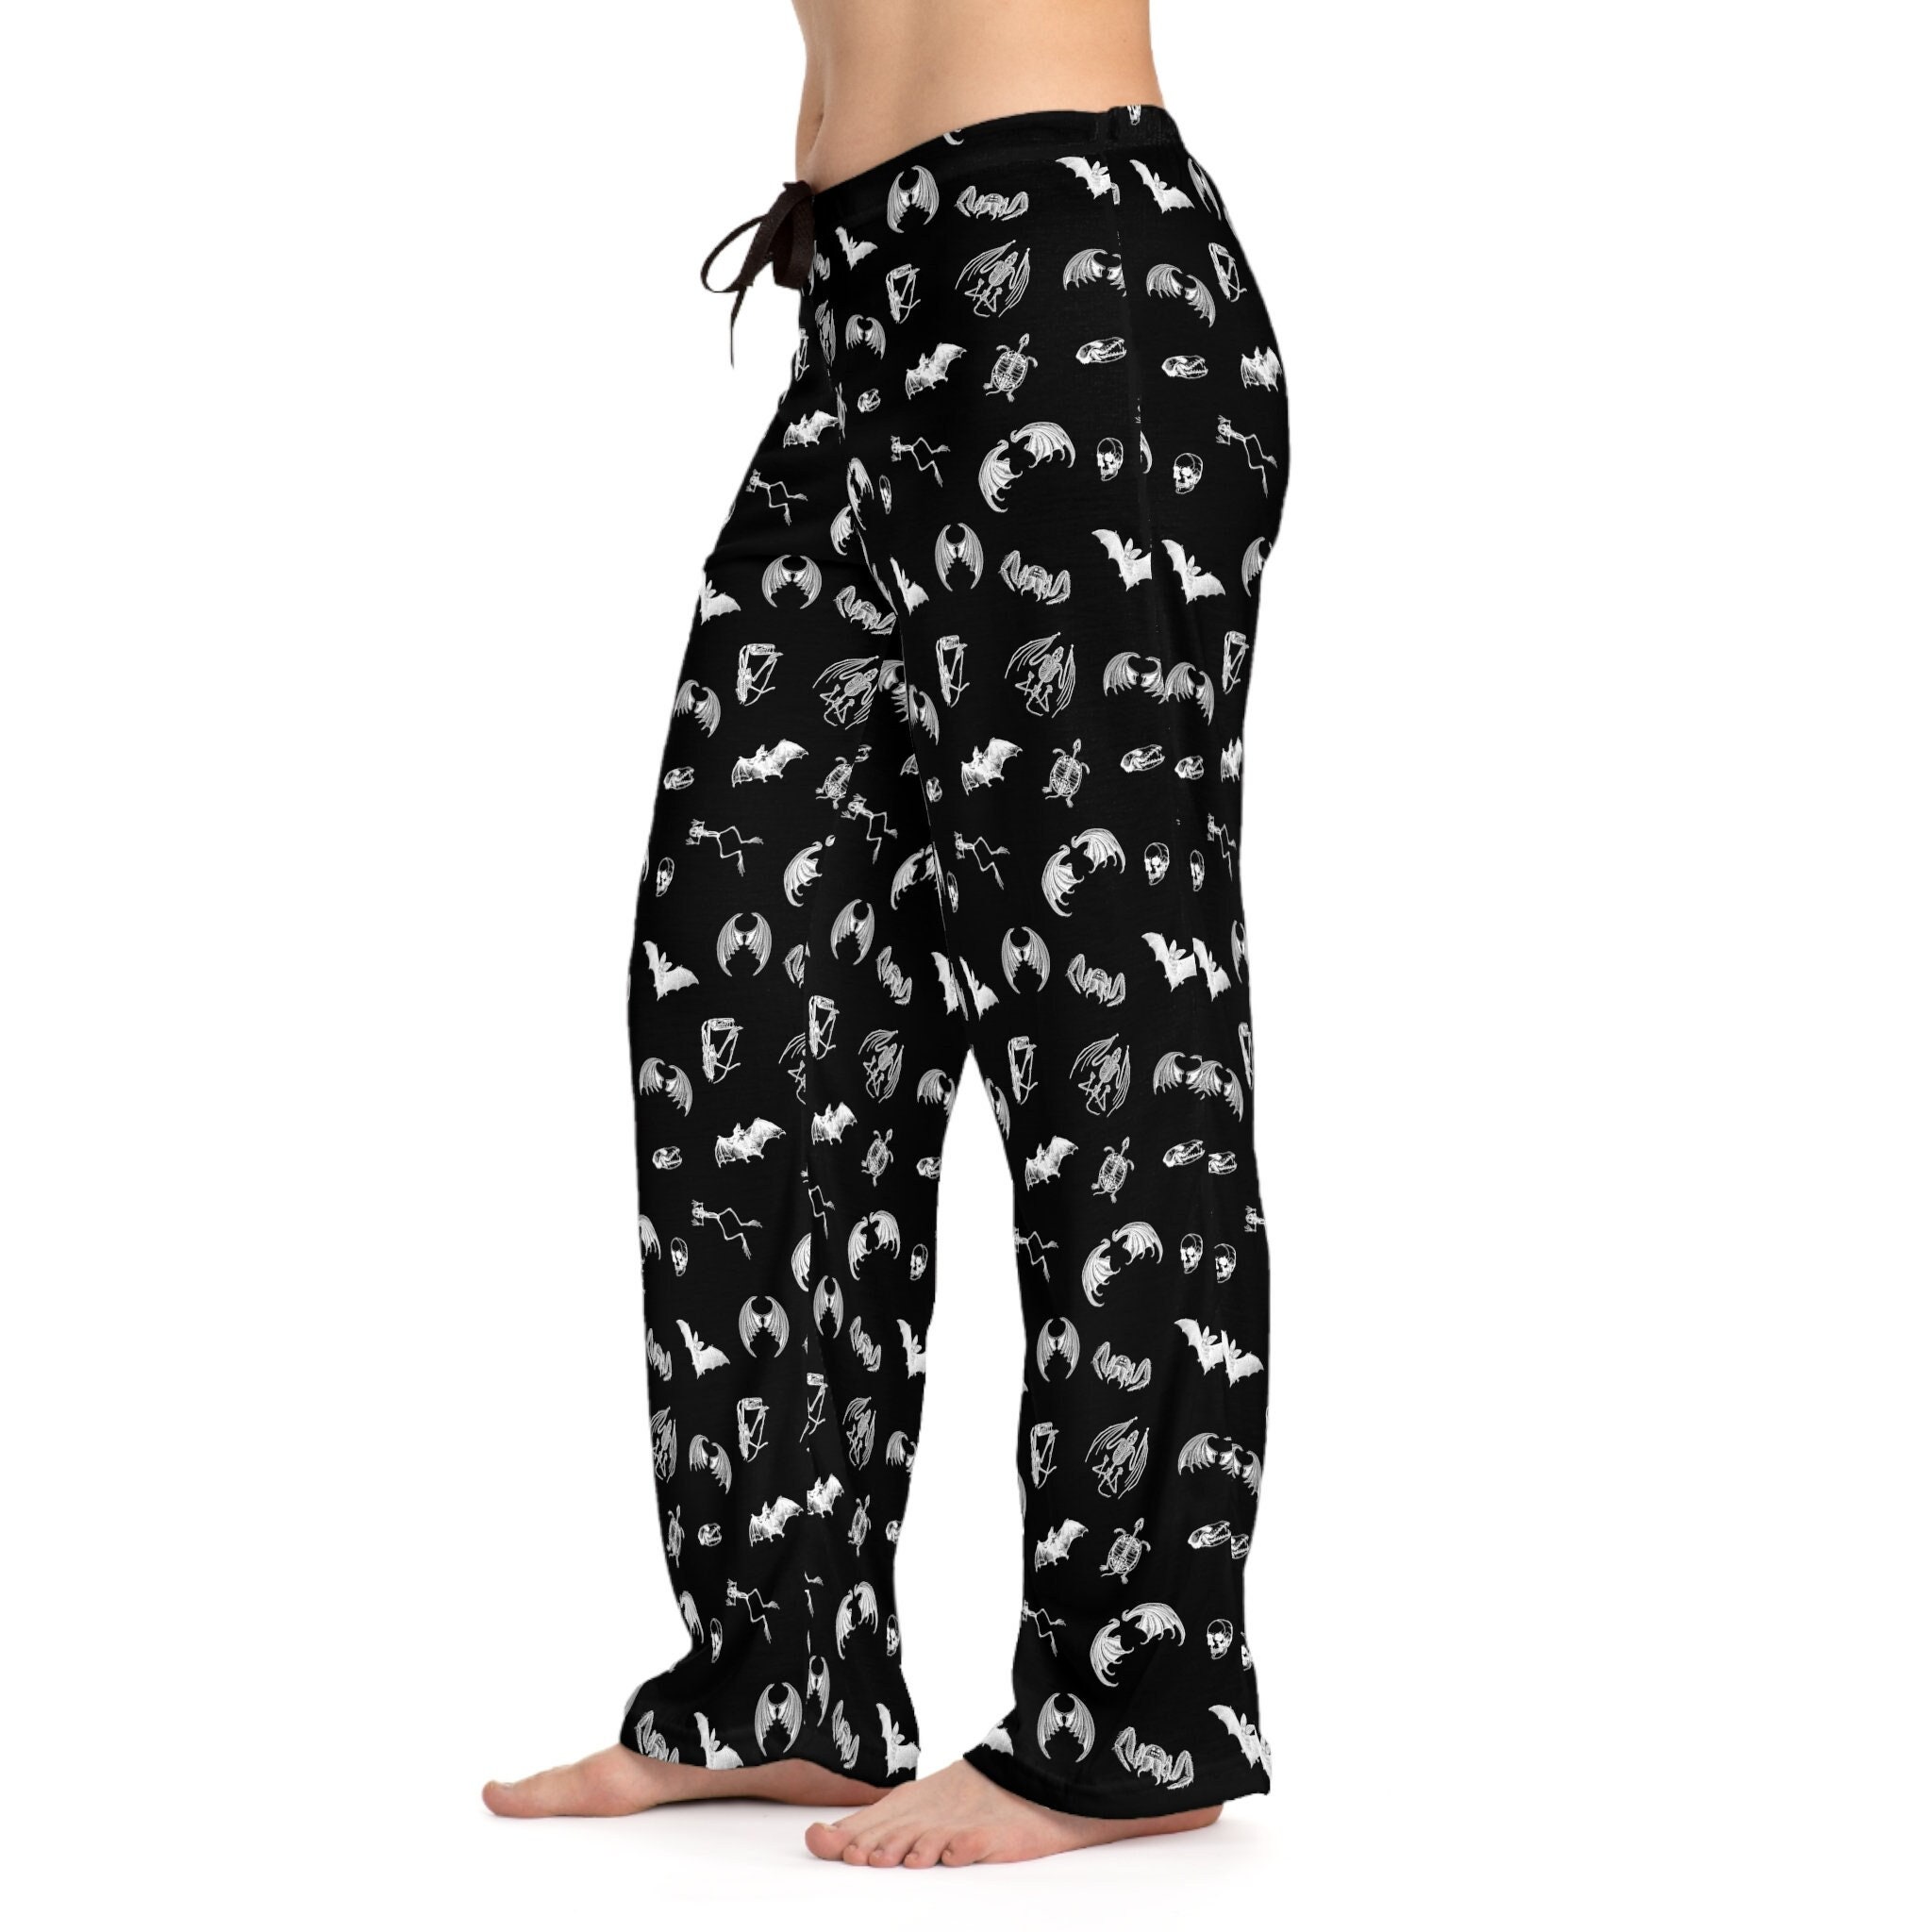 Custom Black and White Plaid Buffalo Flannel Pajama Bottoms 